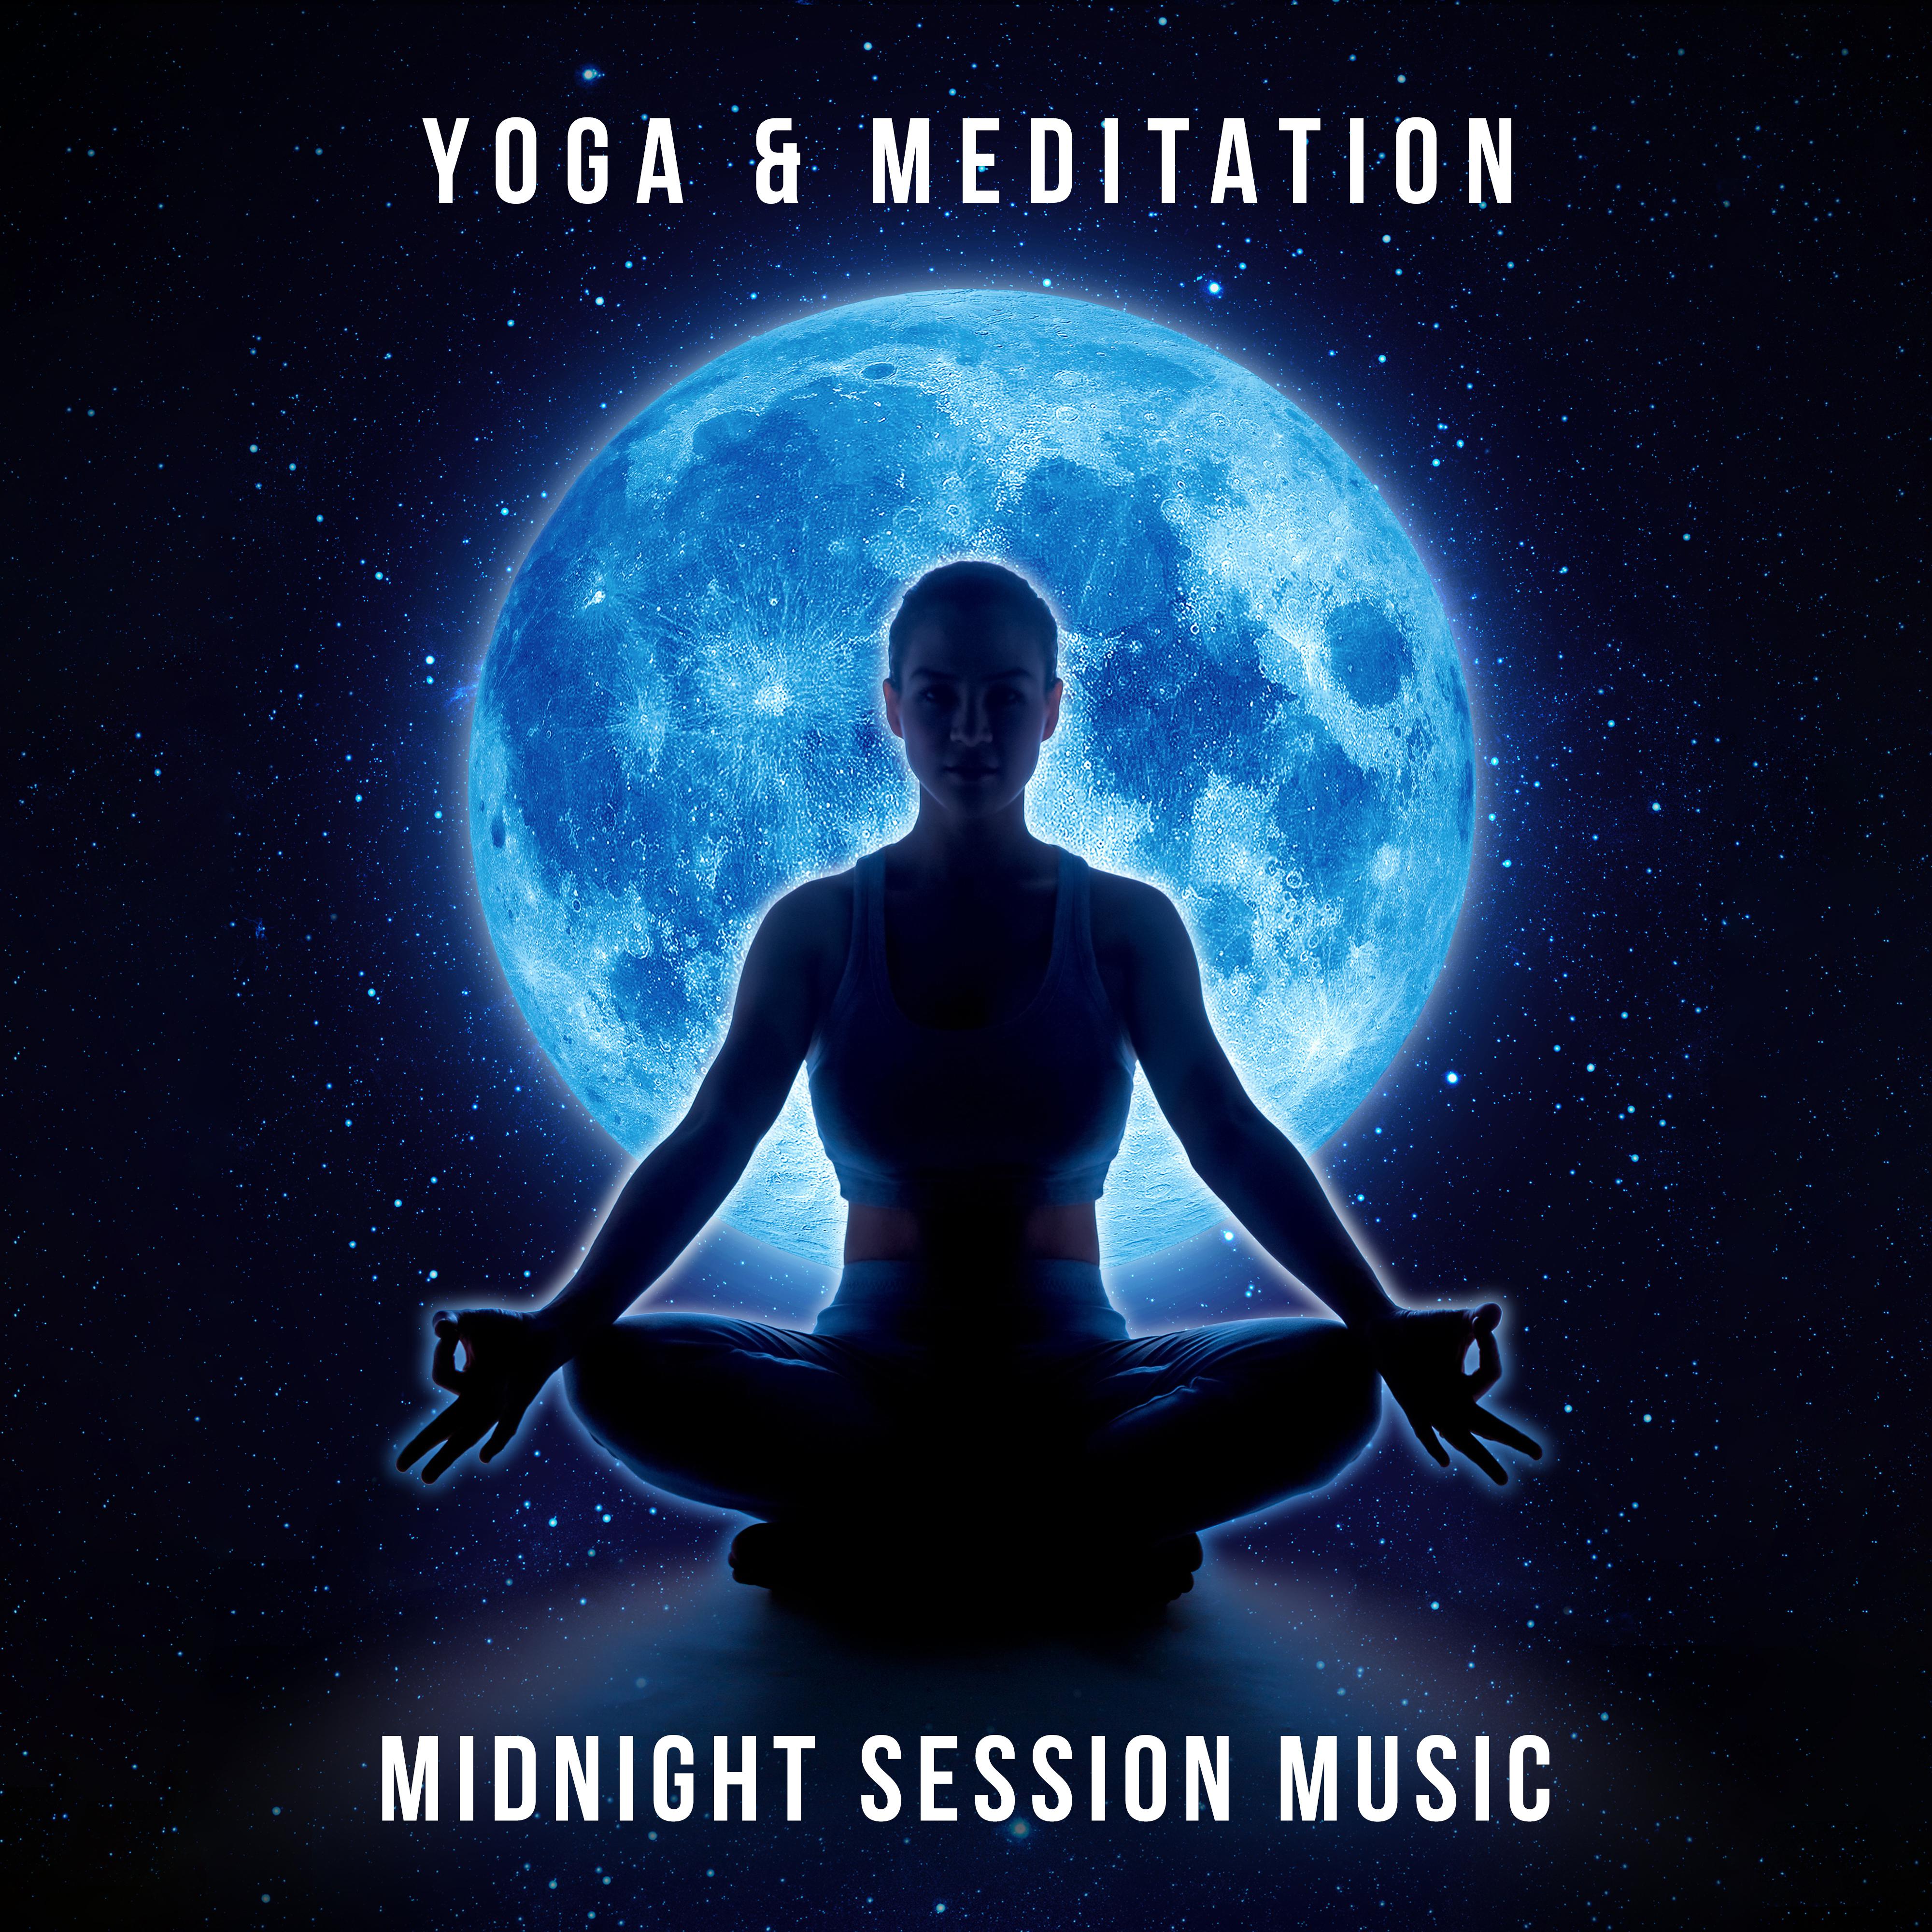 Yoga & Meditation Midnight Session Music